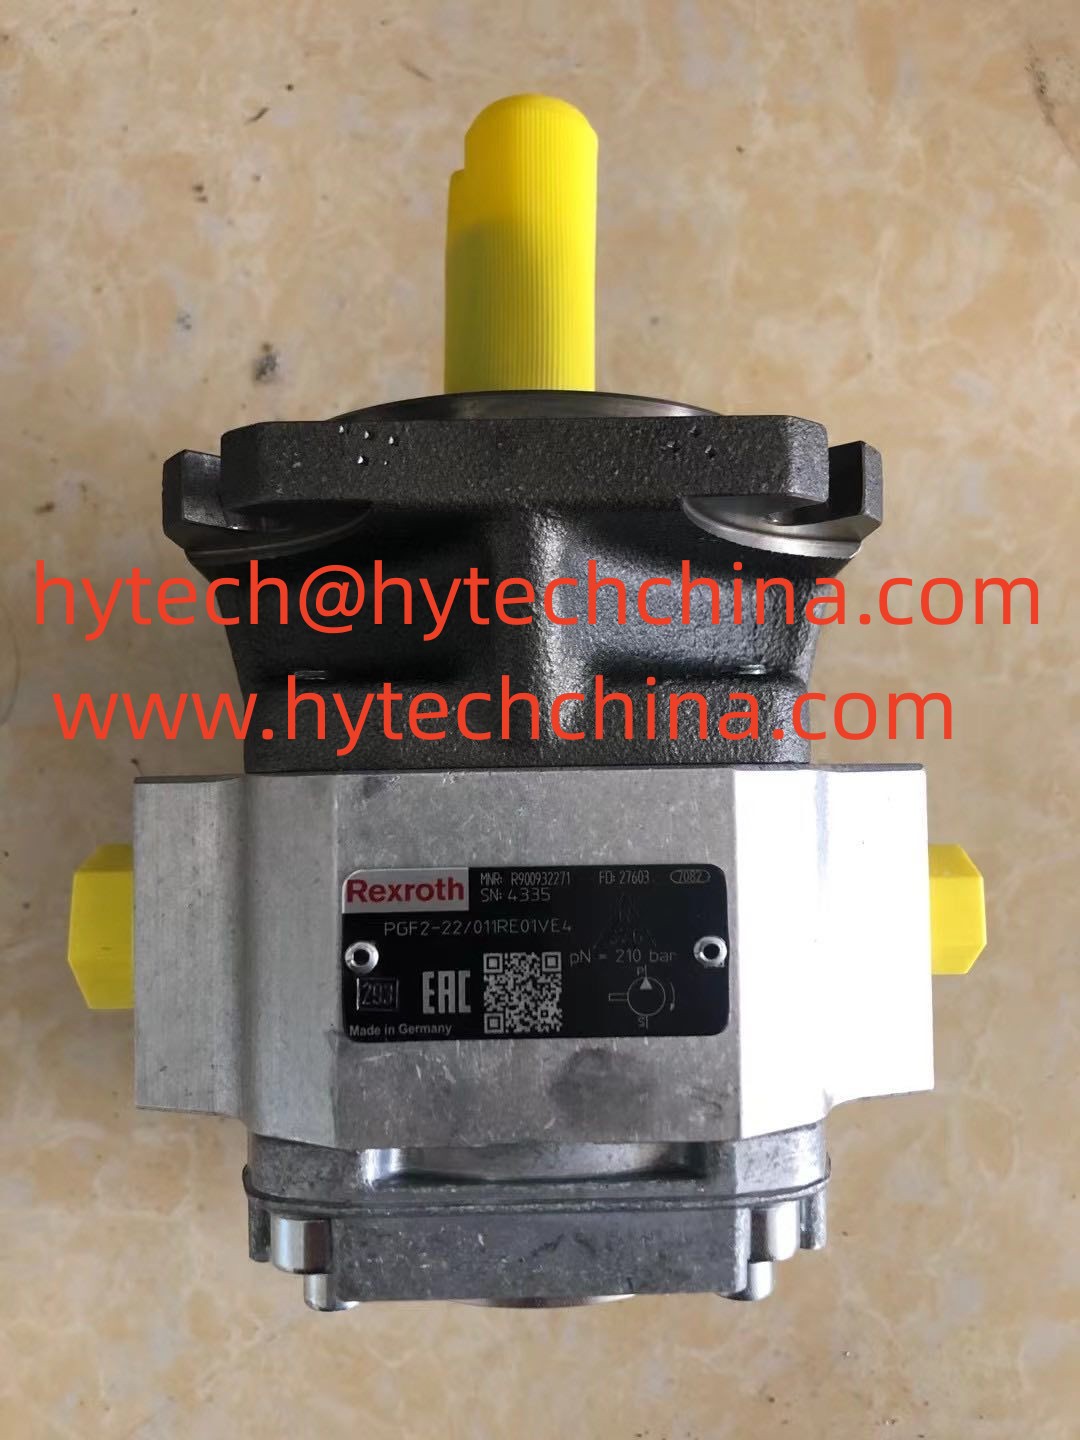 Hydraulic gear pump PGF2-22/011RE01VE4 in stock